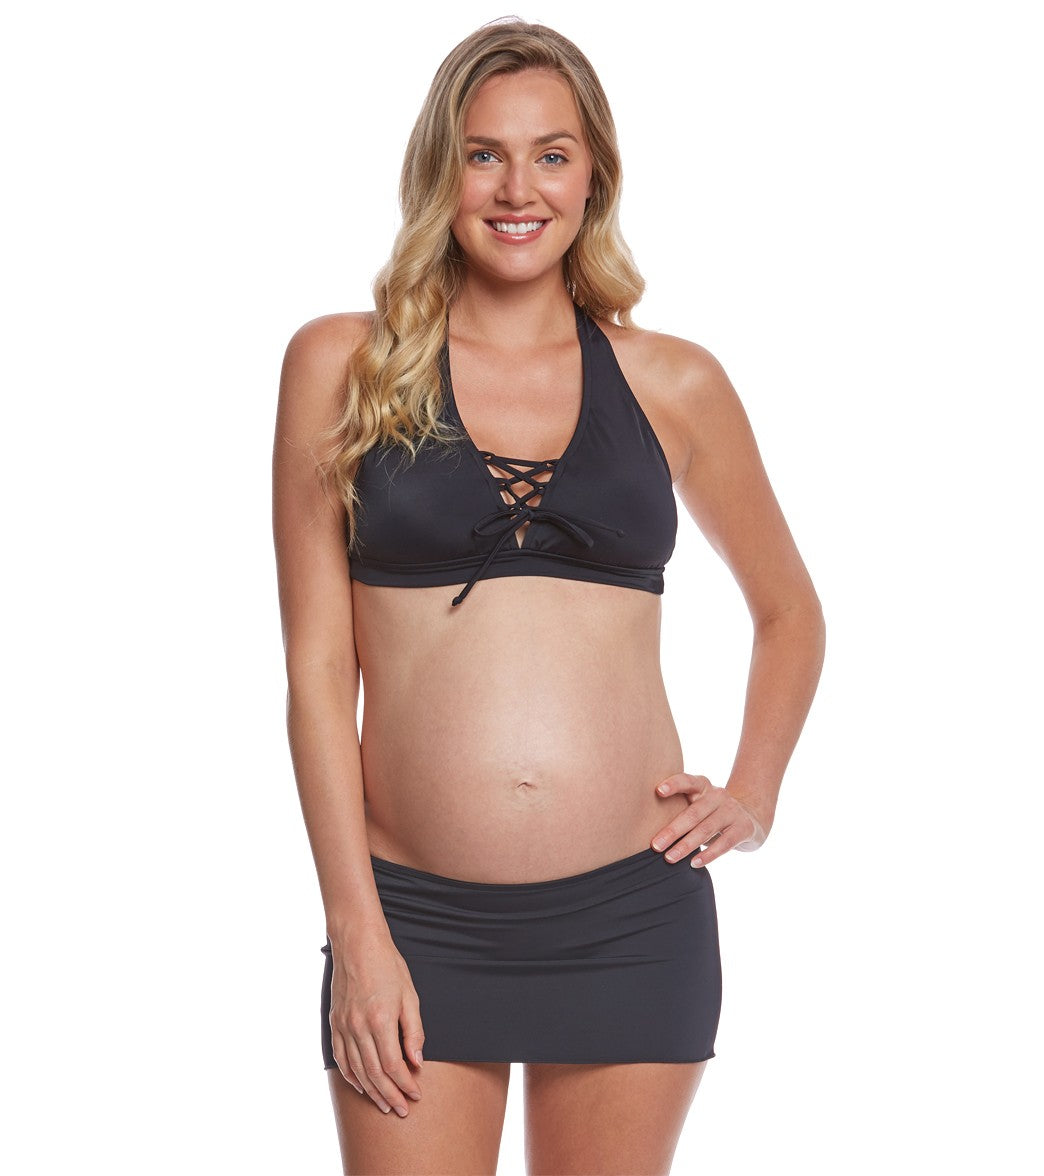 Prego Swimwear Maternity Solid Skirted Bikini Set at